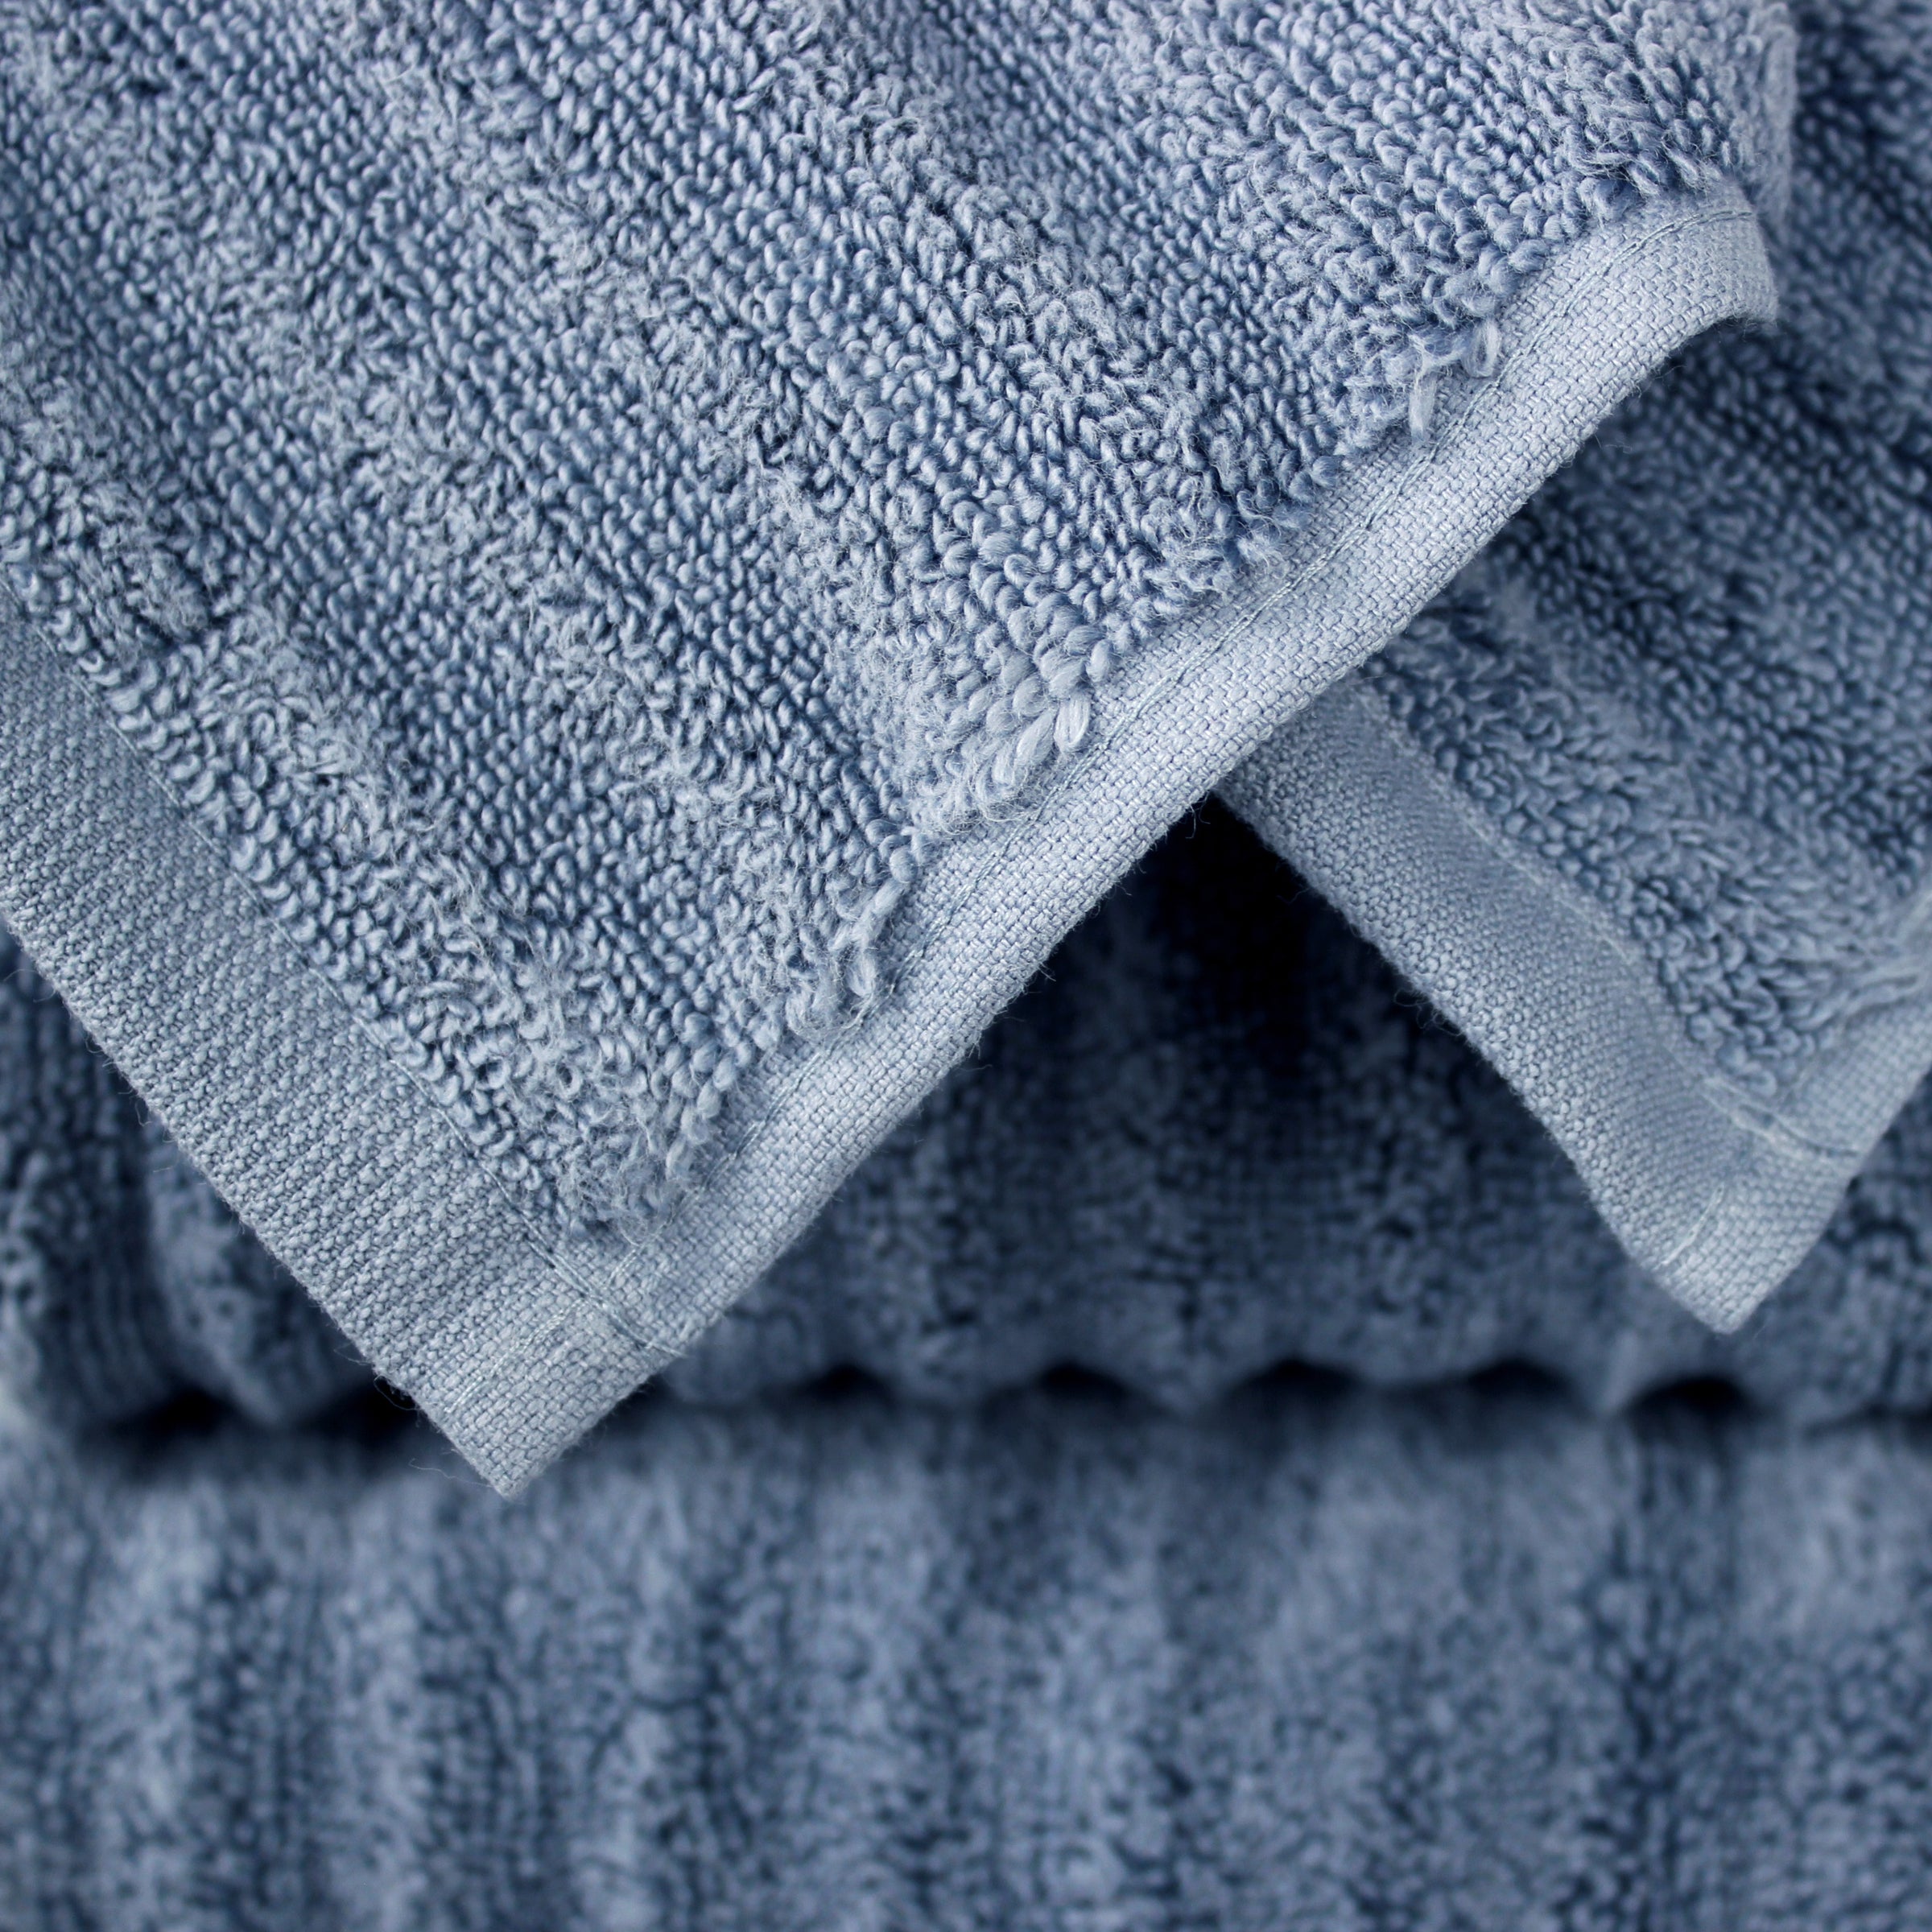 Cotton Craft 6 Piece Towel Set - 100% Cotton Plush 600 GSM Sculpted Super Zero Twist Pleated Ribbed Bathroom Towel Set - Soft Absorbent Luxury - 2